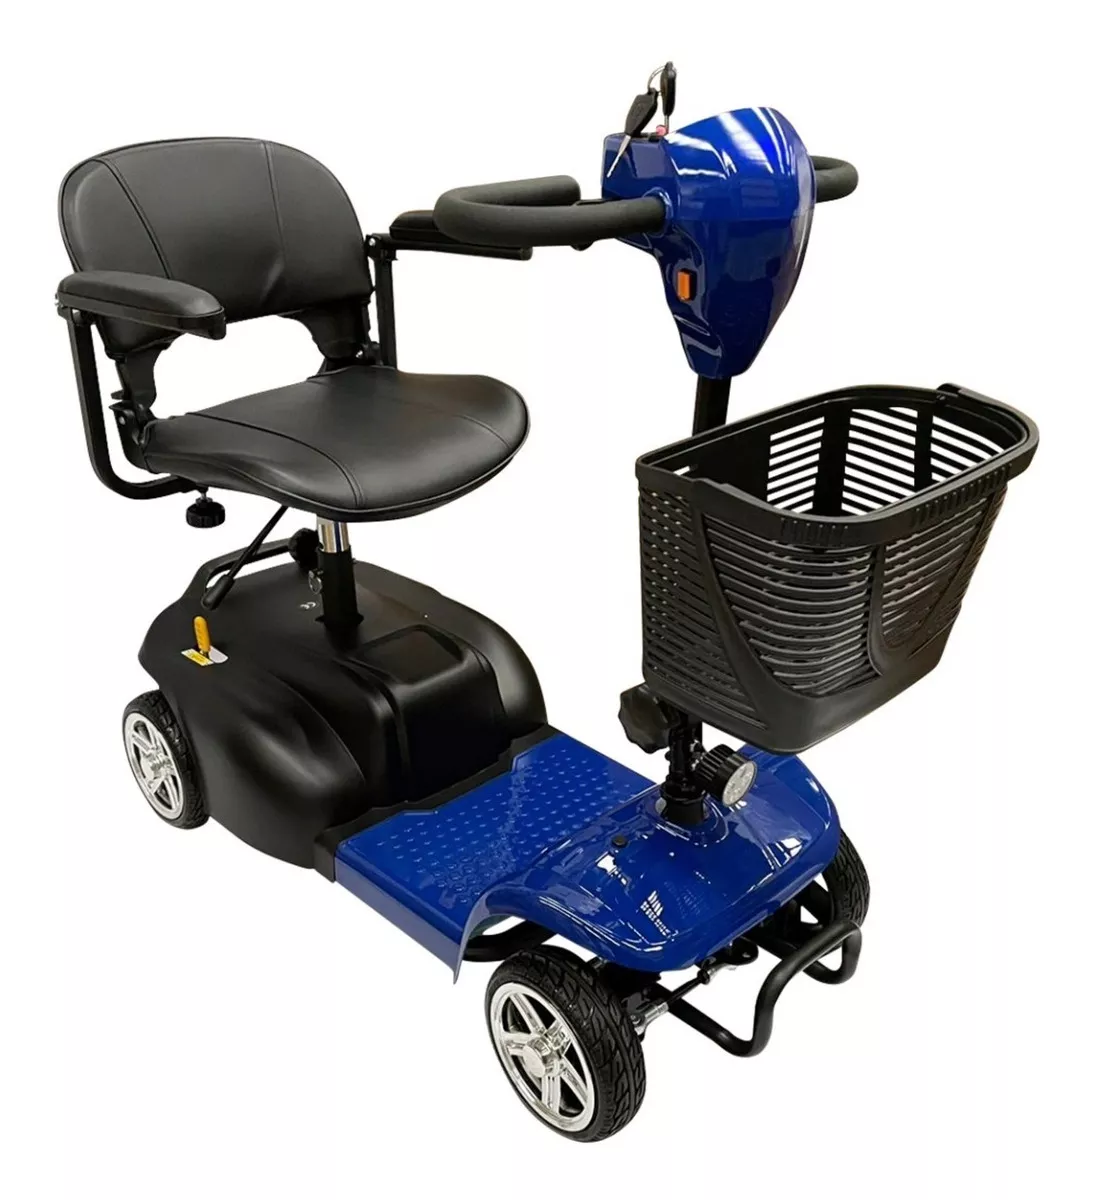 Segunda imagen para búsqueda de silla de ruedas usadas